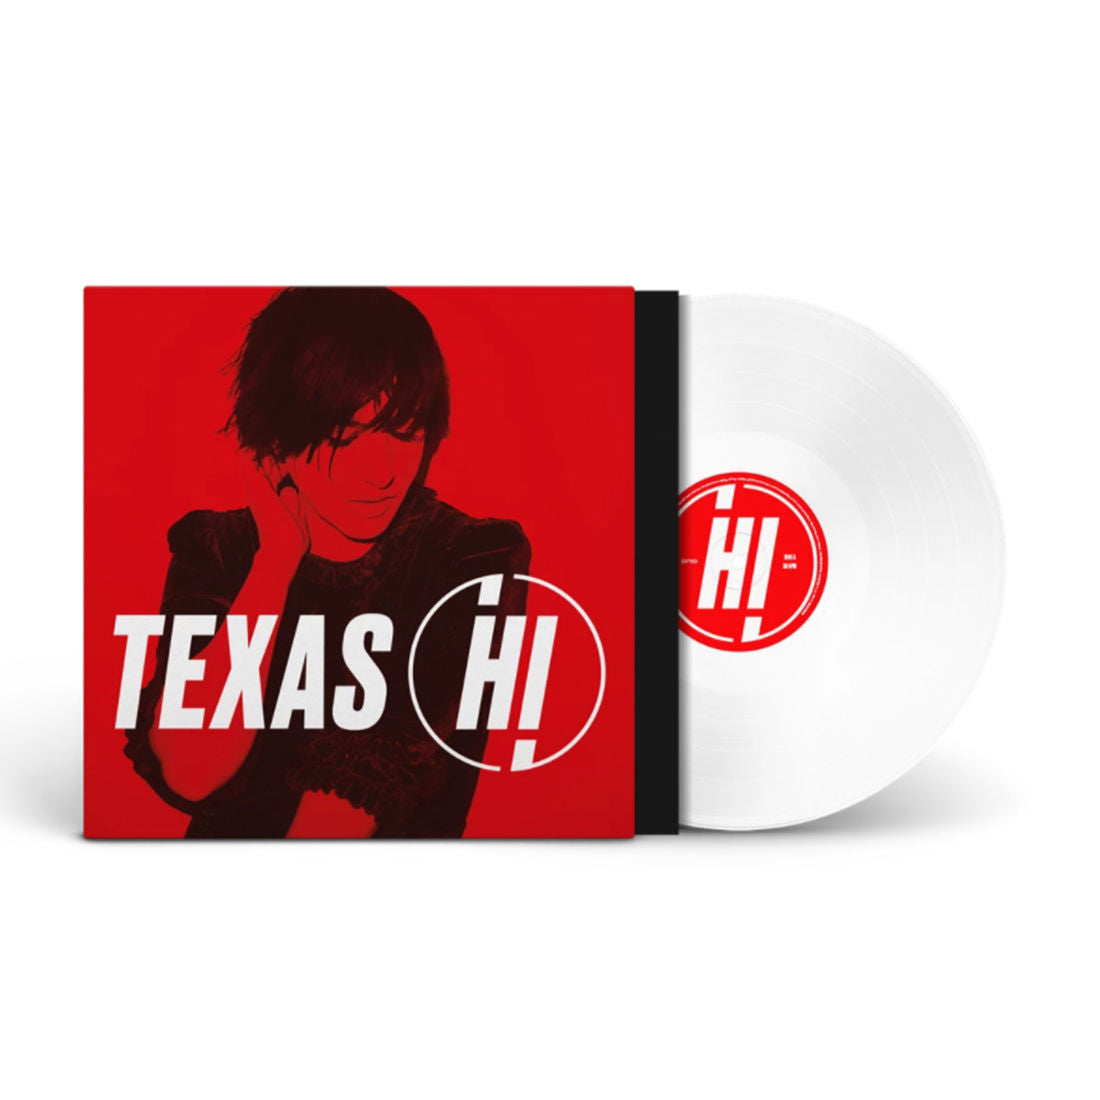 Texas - Hi: Limited White Vinyl LP